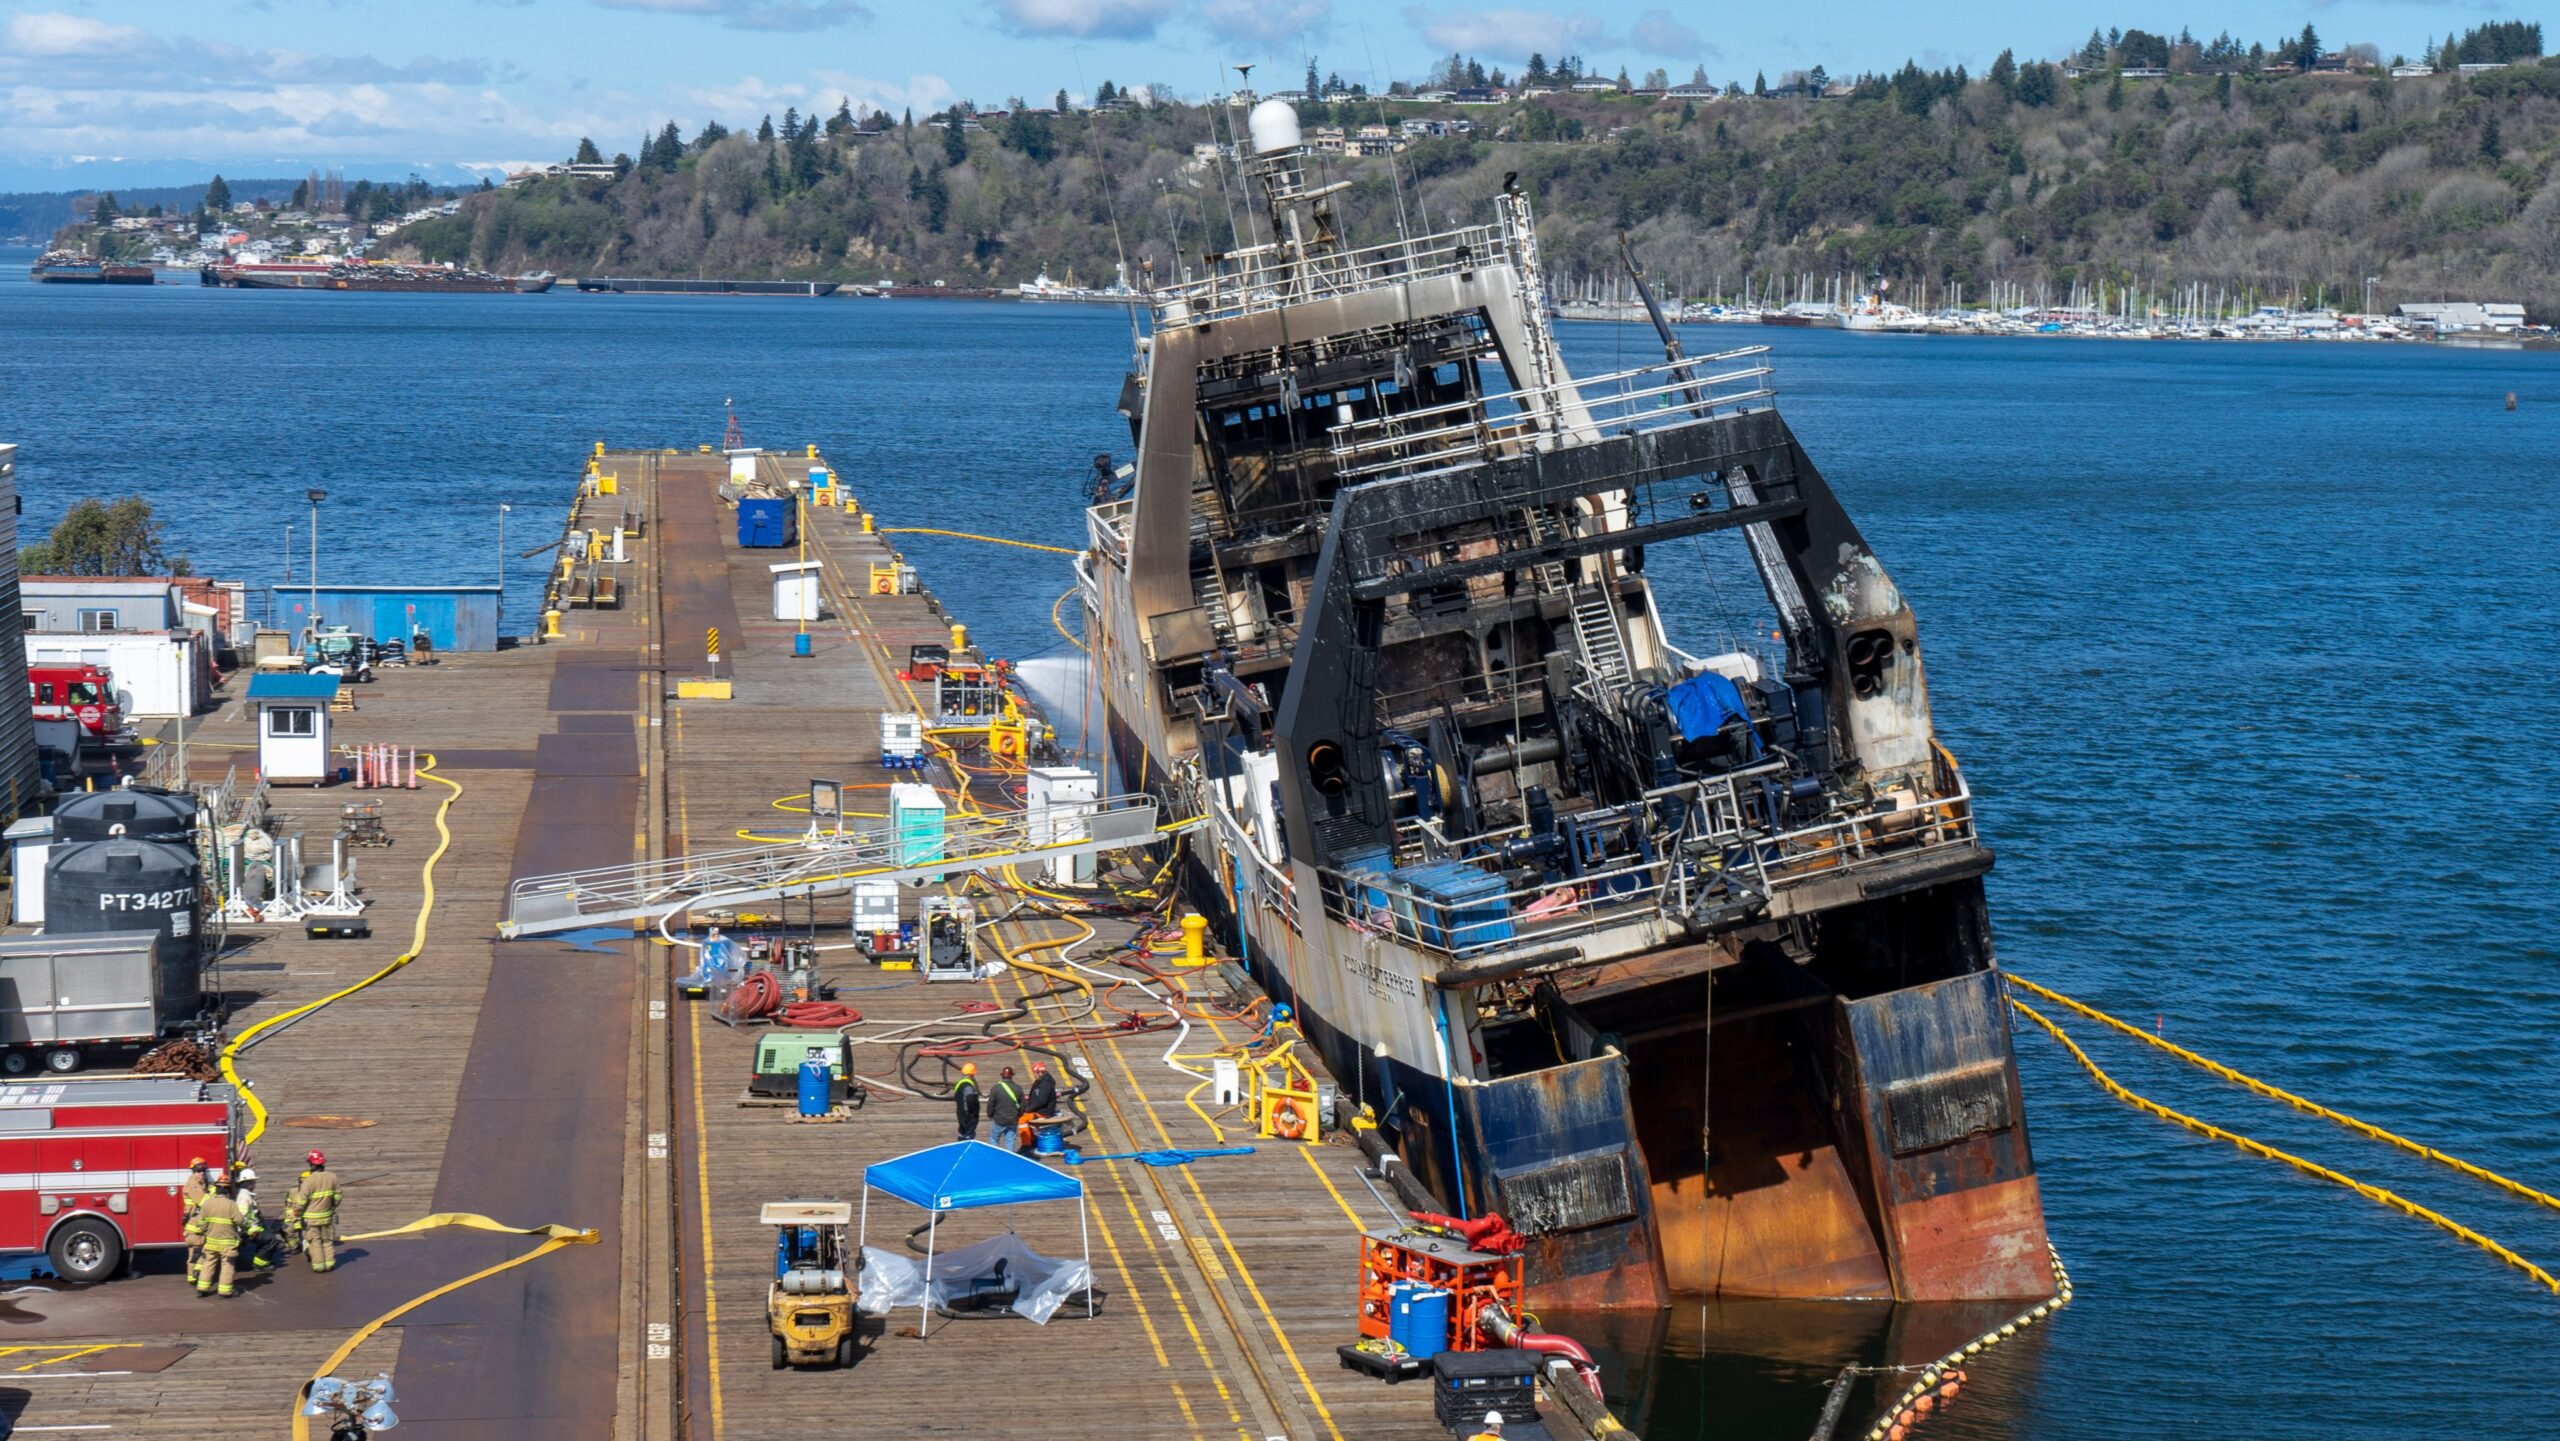 Response Continues for Kodiak Enterprise Fire in Tacoma